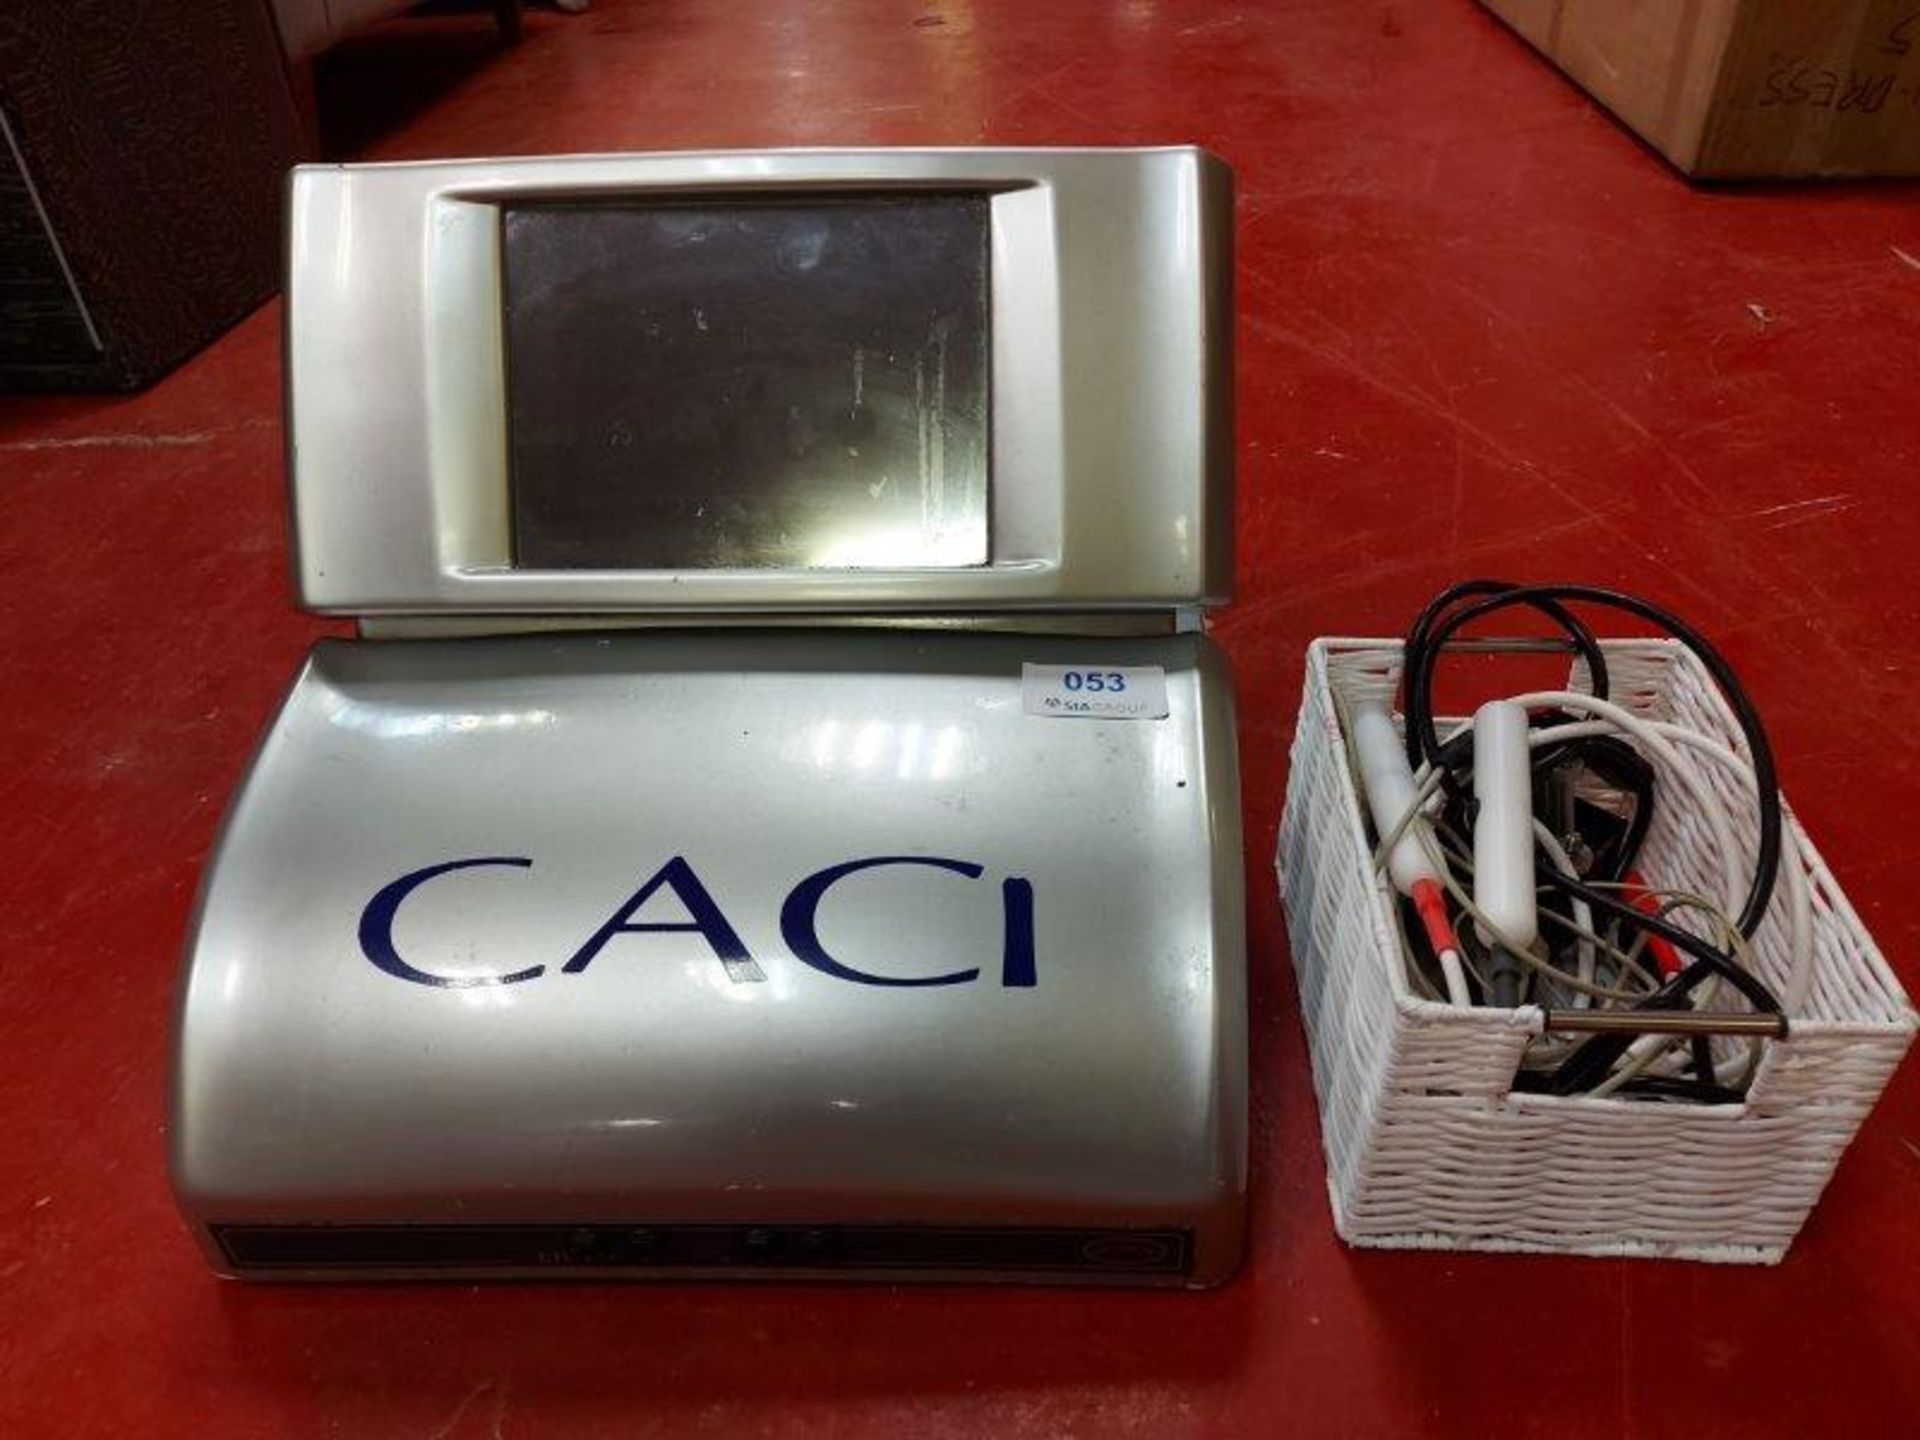 Caci classic non surgical facelift machine